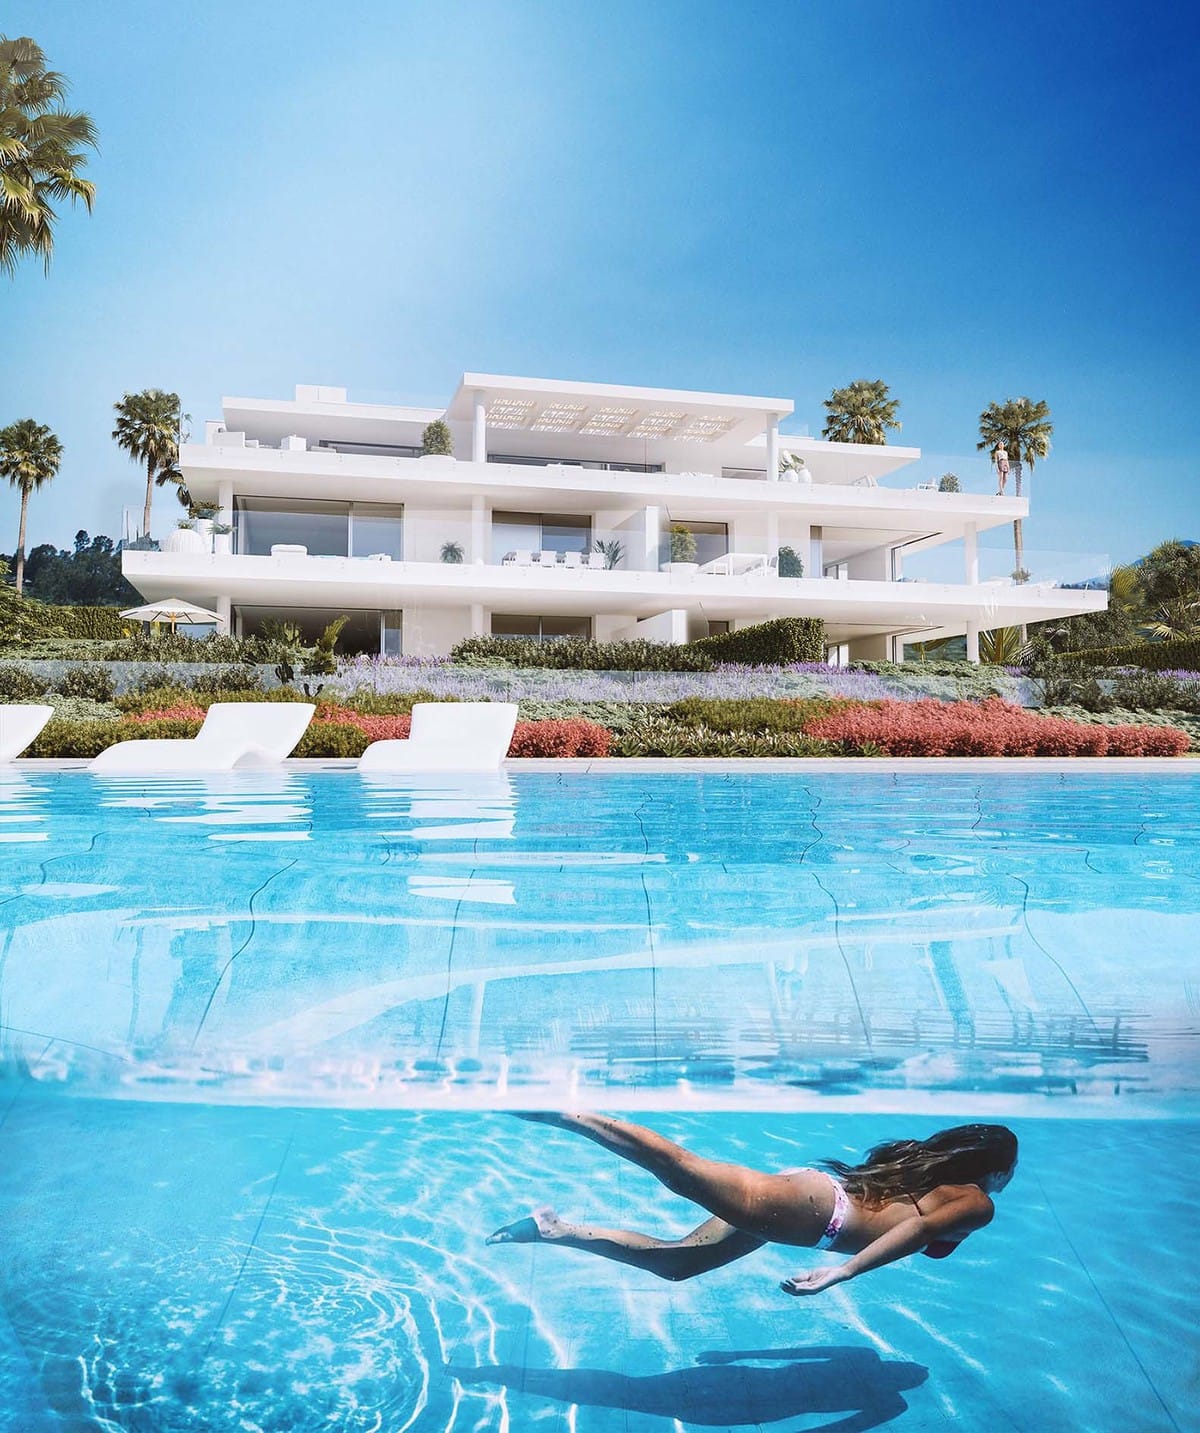 Inmobiliaria en Marbella, real estate, properties for sale, obra nueva, new developments